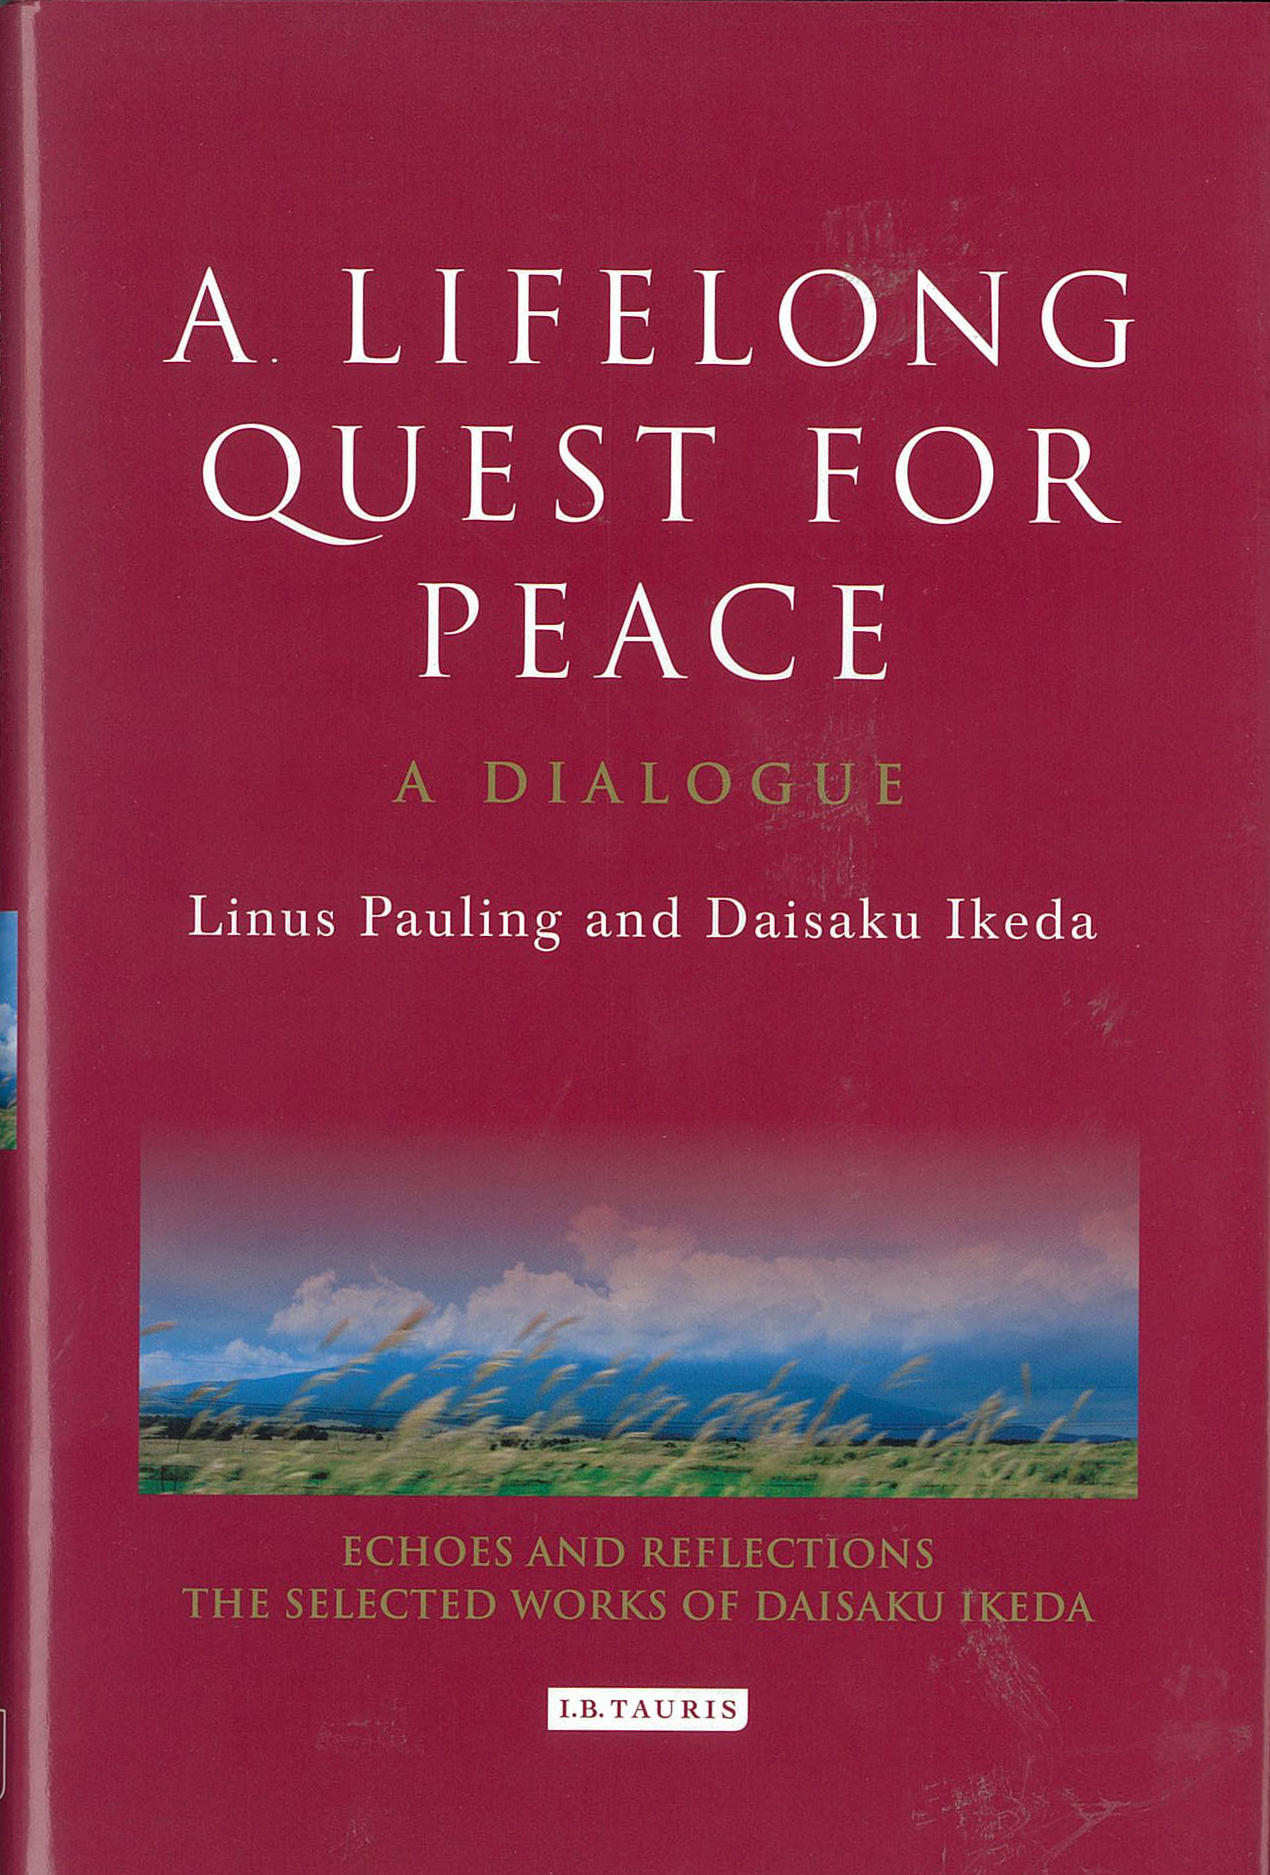 A Lifelong Quest For Peace